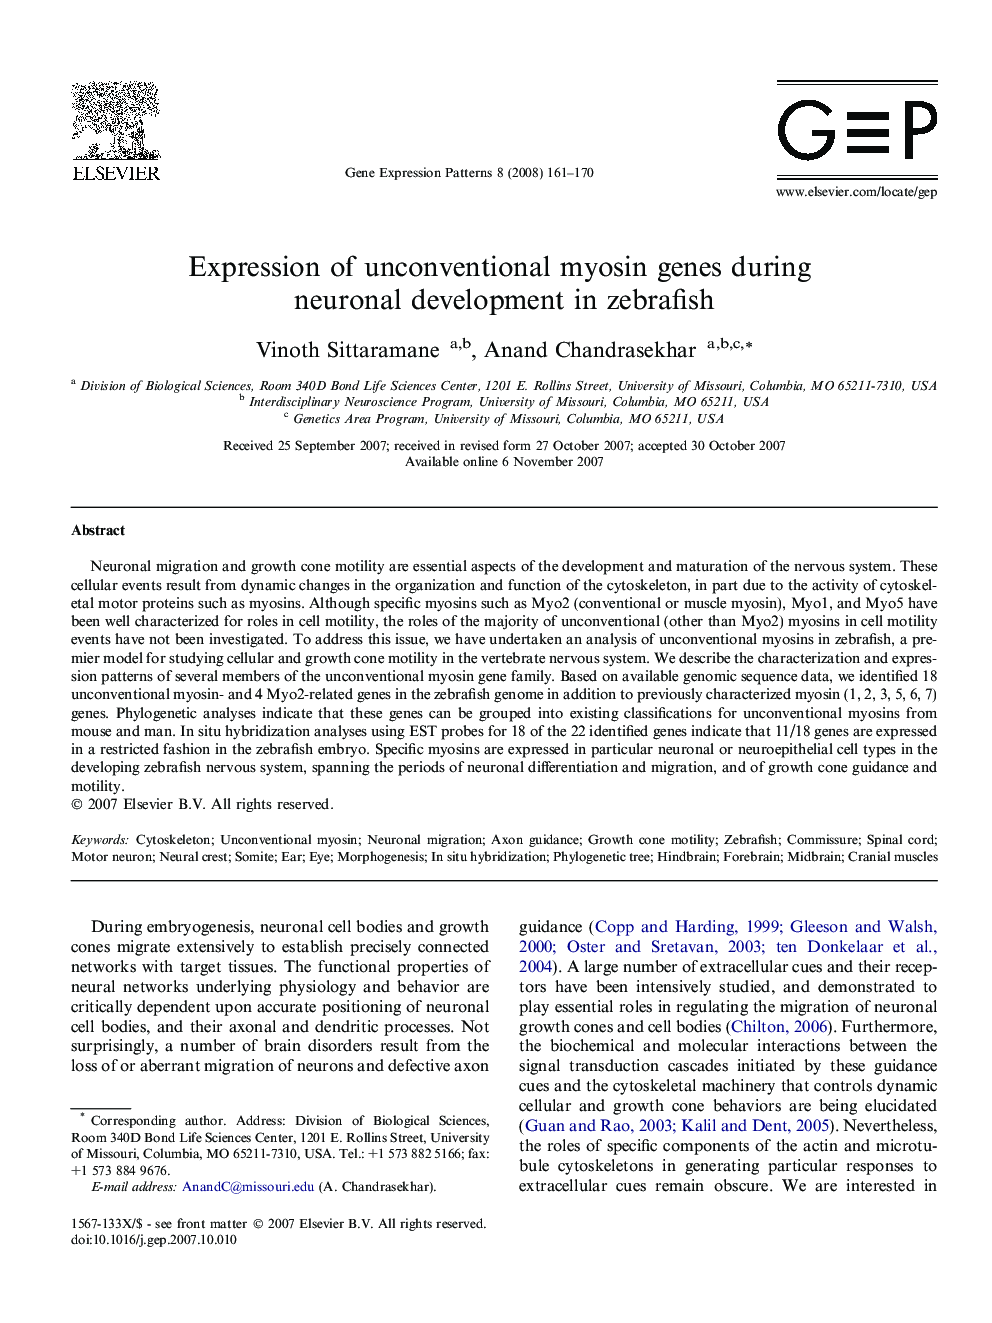 Expression of unconventional myosin genes during neuronal development in zebrafish